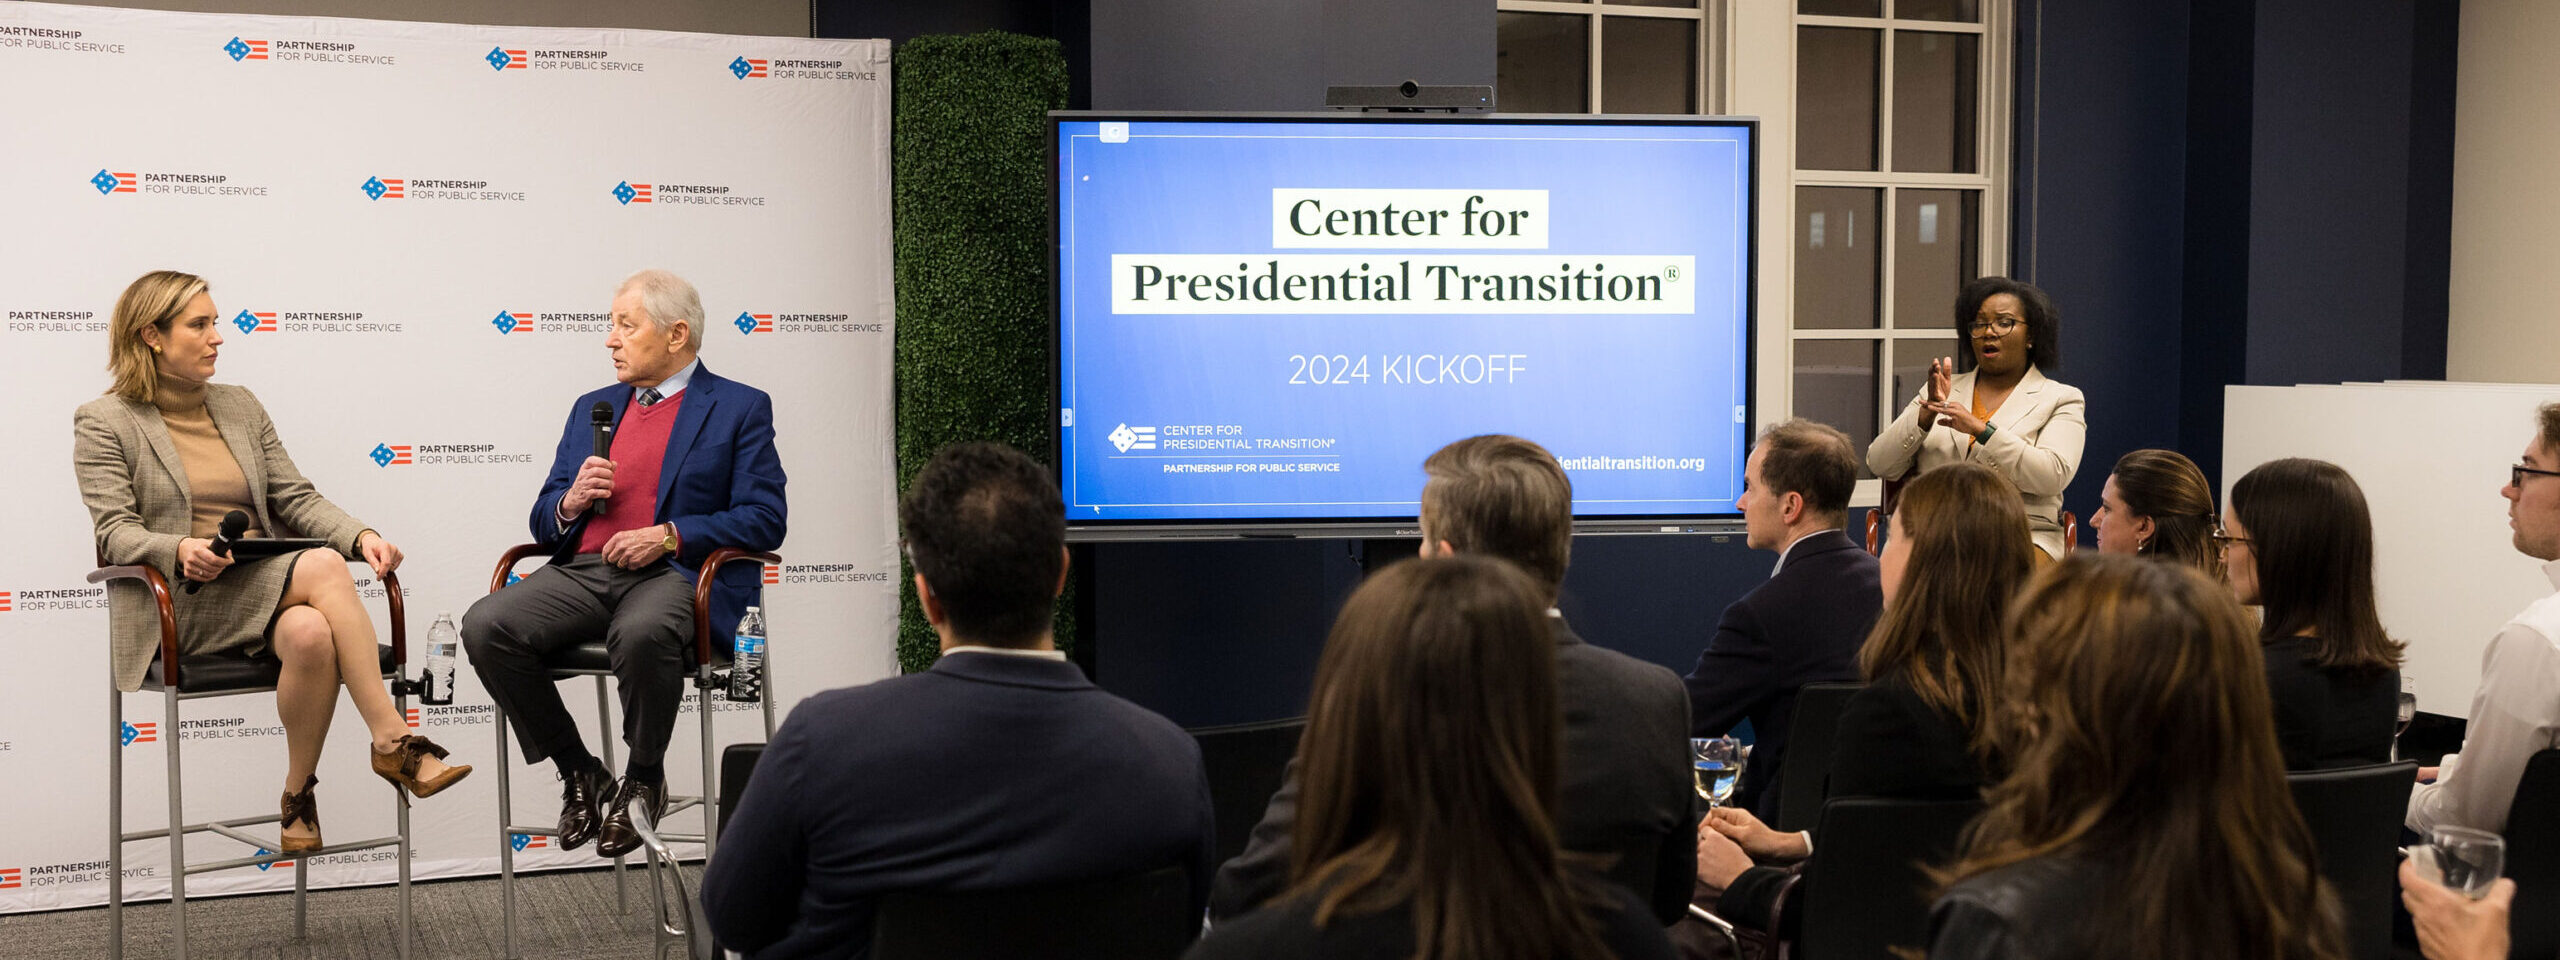 CBS’ Margaret Brennan and former Defense Secretary Chuck Hagel during the Center for Presidential Transition 2024 kickoff.